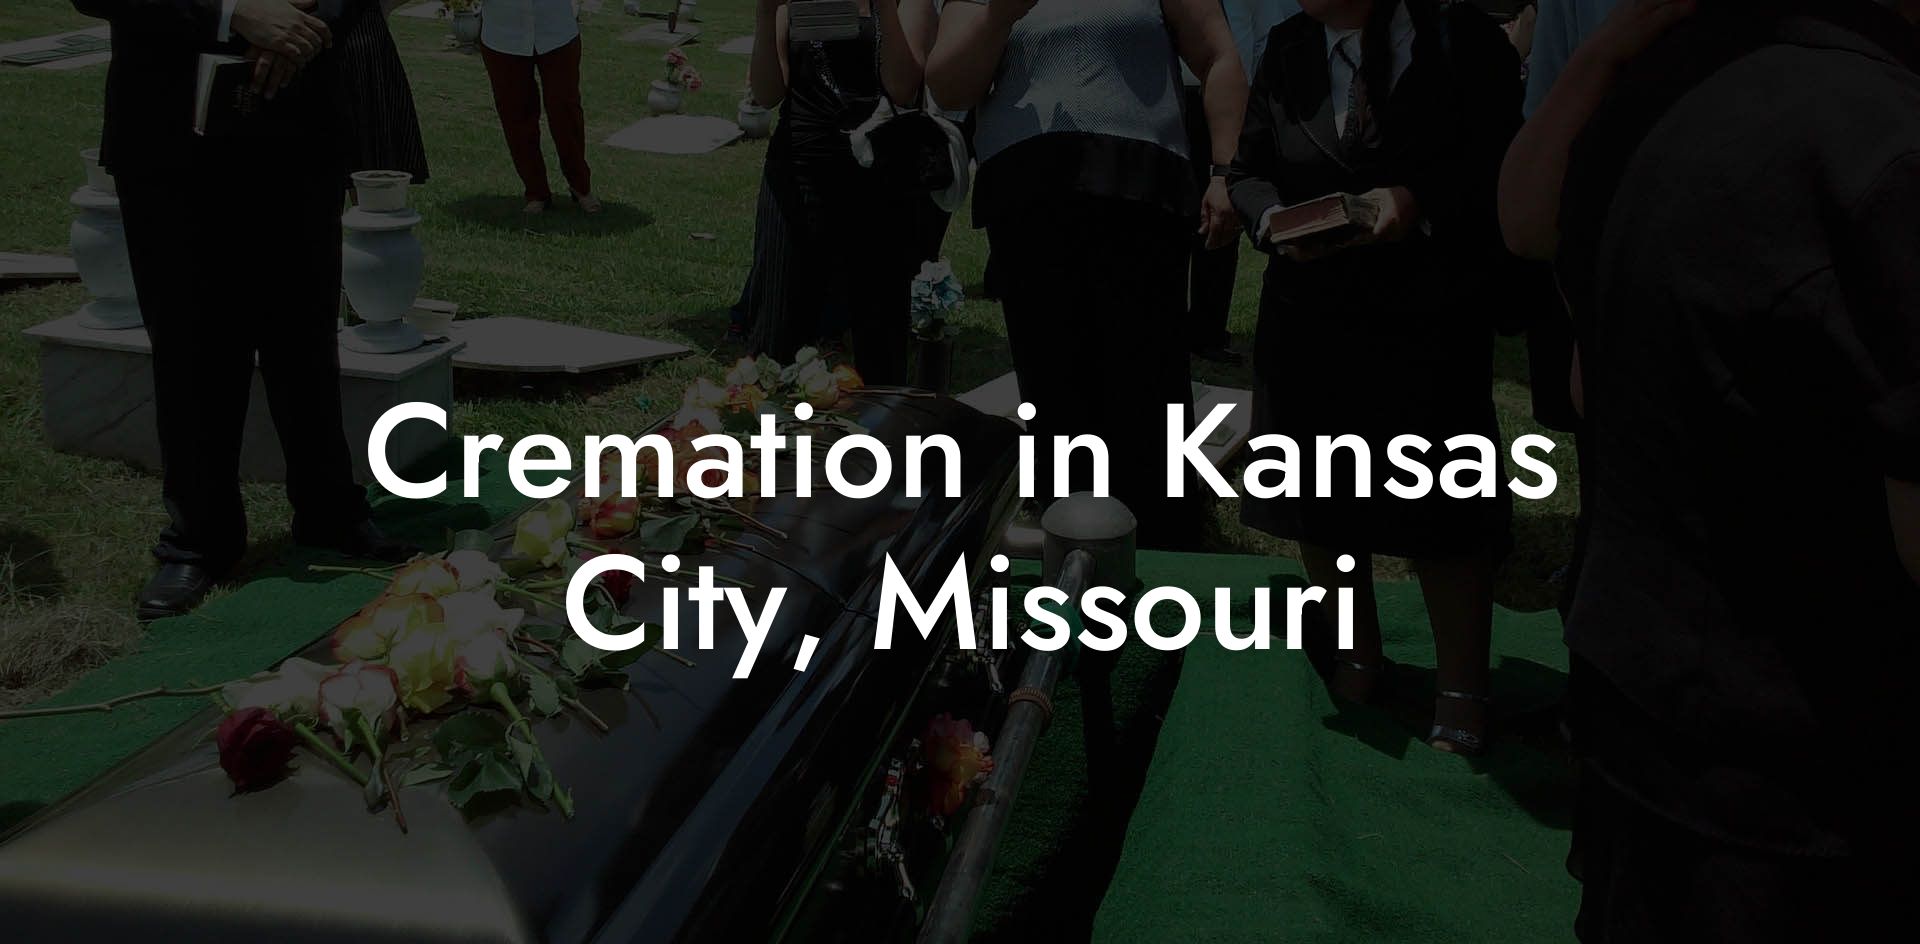 Cremation in Kansas City, Missouri